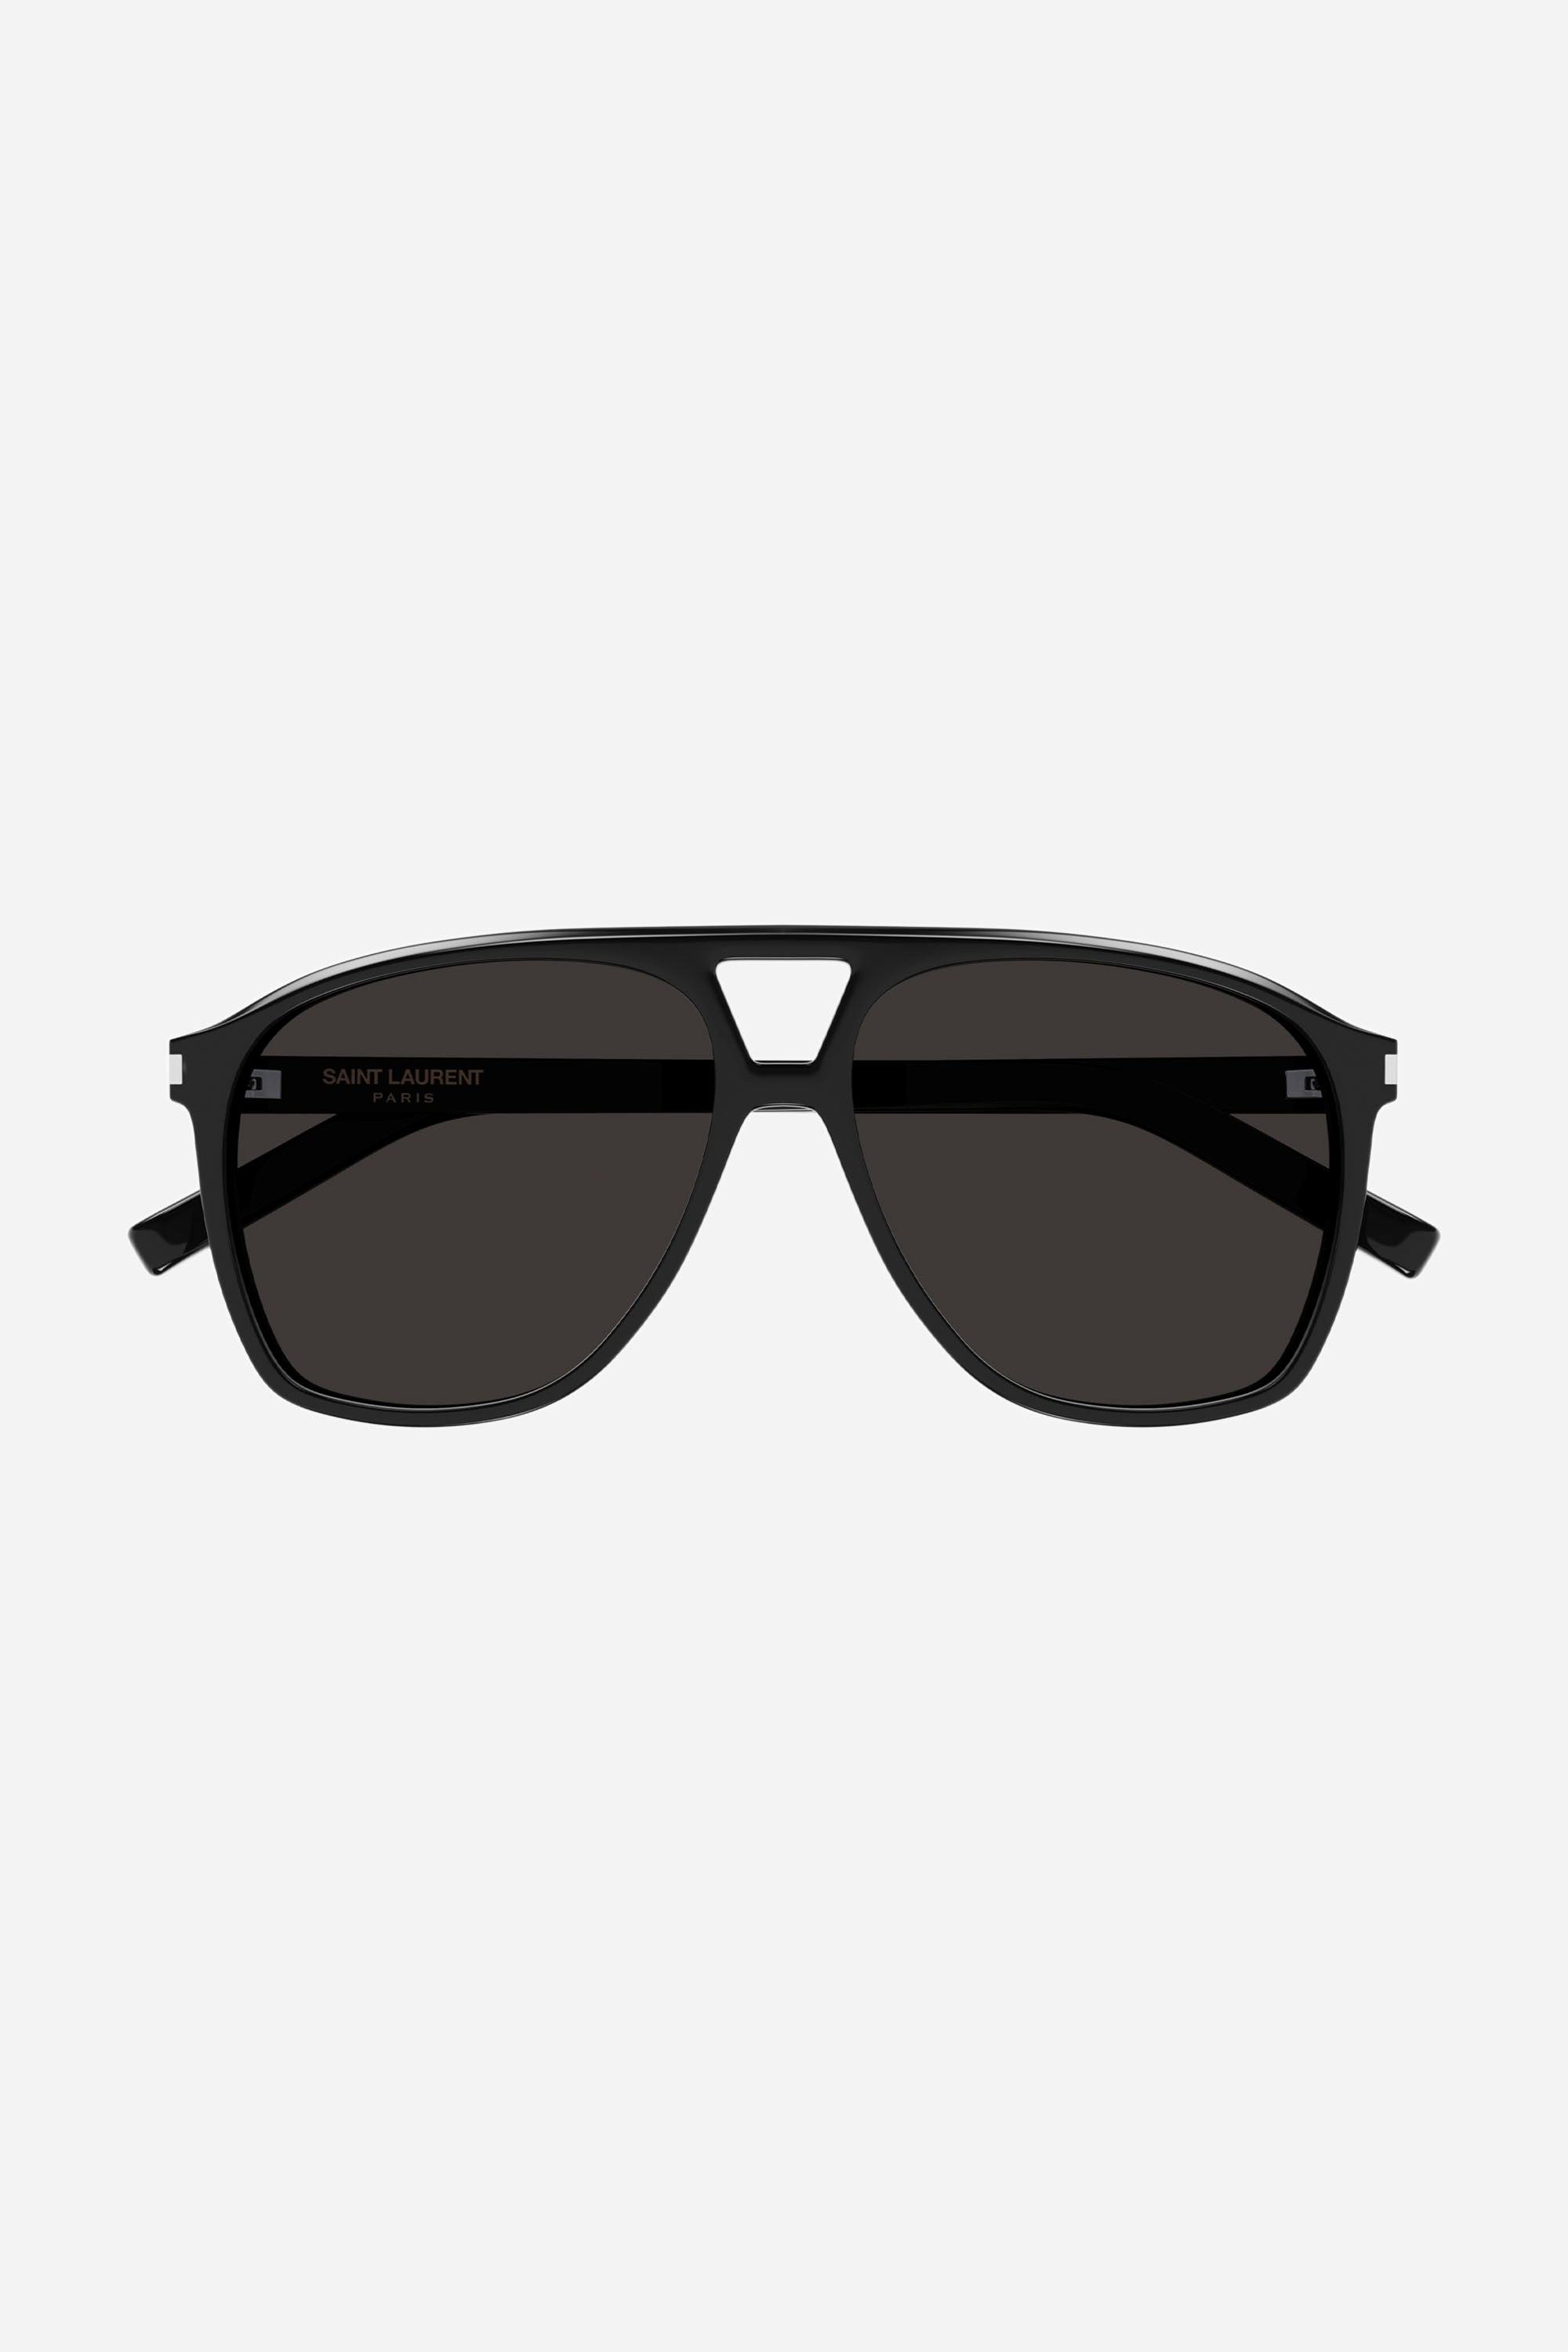 Saint Laurent pilot black sunglasses - Eyewear Club